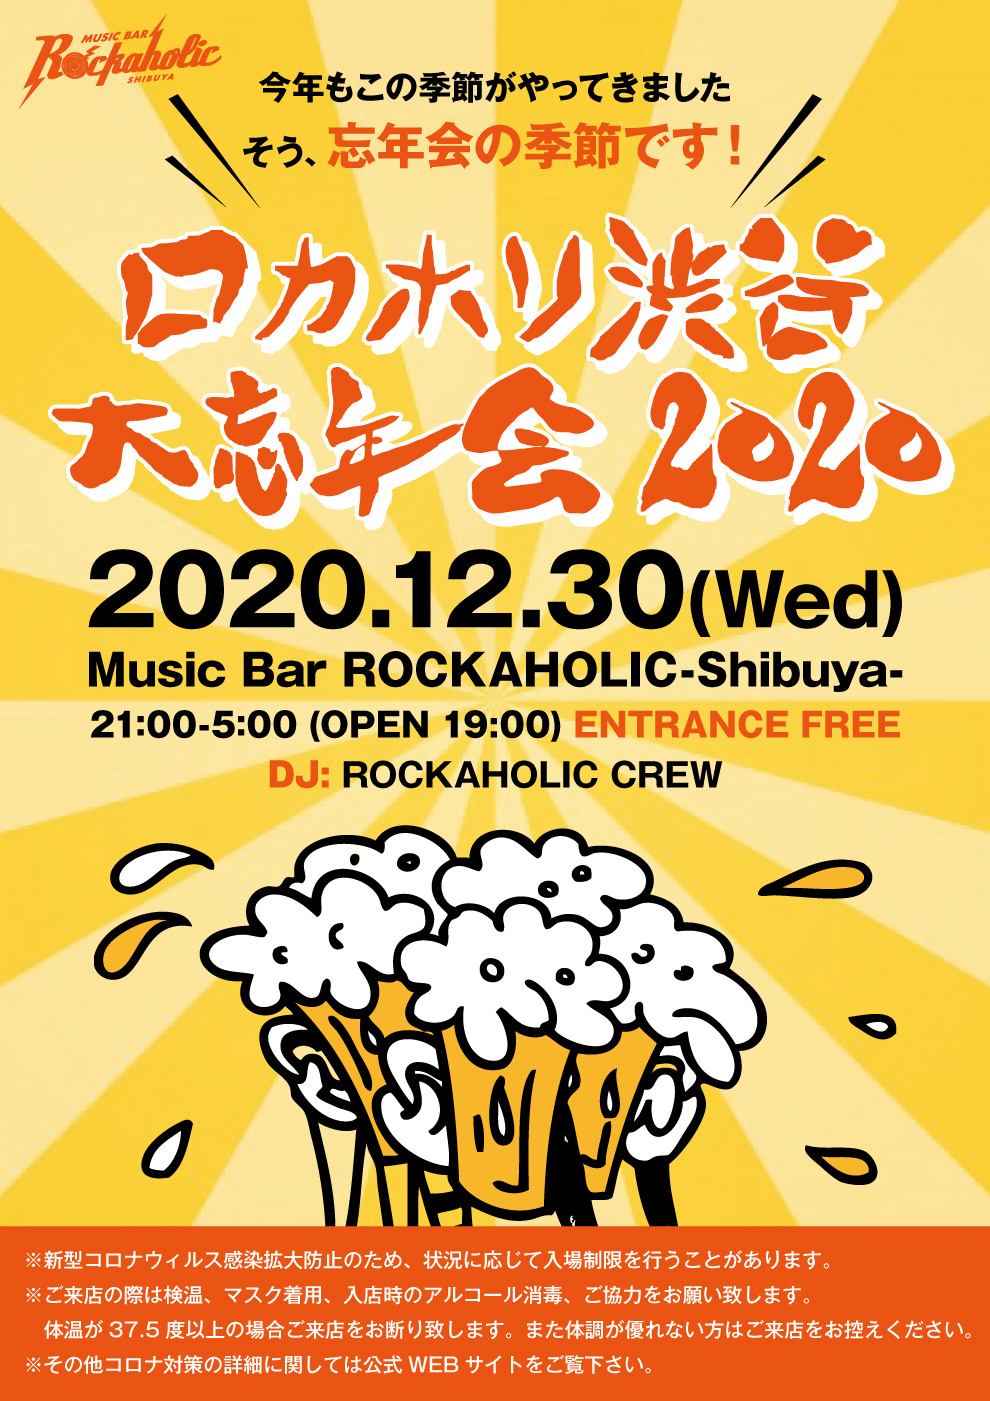 https://bar-rockaholic.jp/shibuya/blog/8B10EC46-F159-41F0-A353-848BCB35199D.jpeg